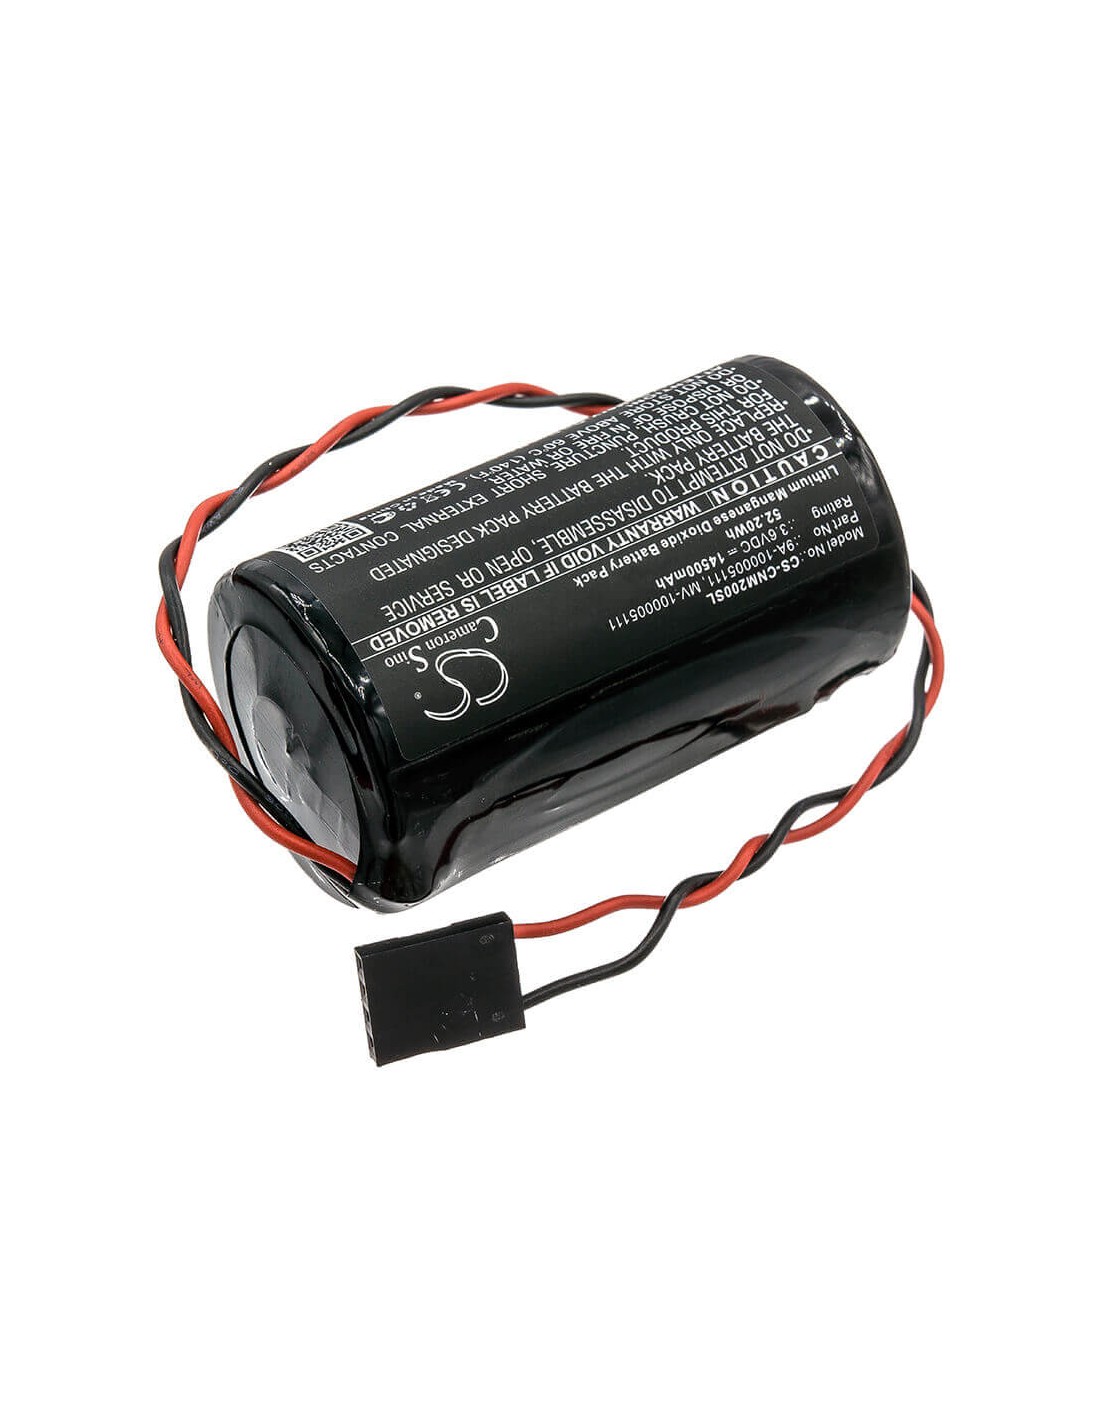 Battery for Alexor, Wt4911b, Wt4911batt, Cameron Nuflo 3.6V, 14500mAh - 52.20Wh